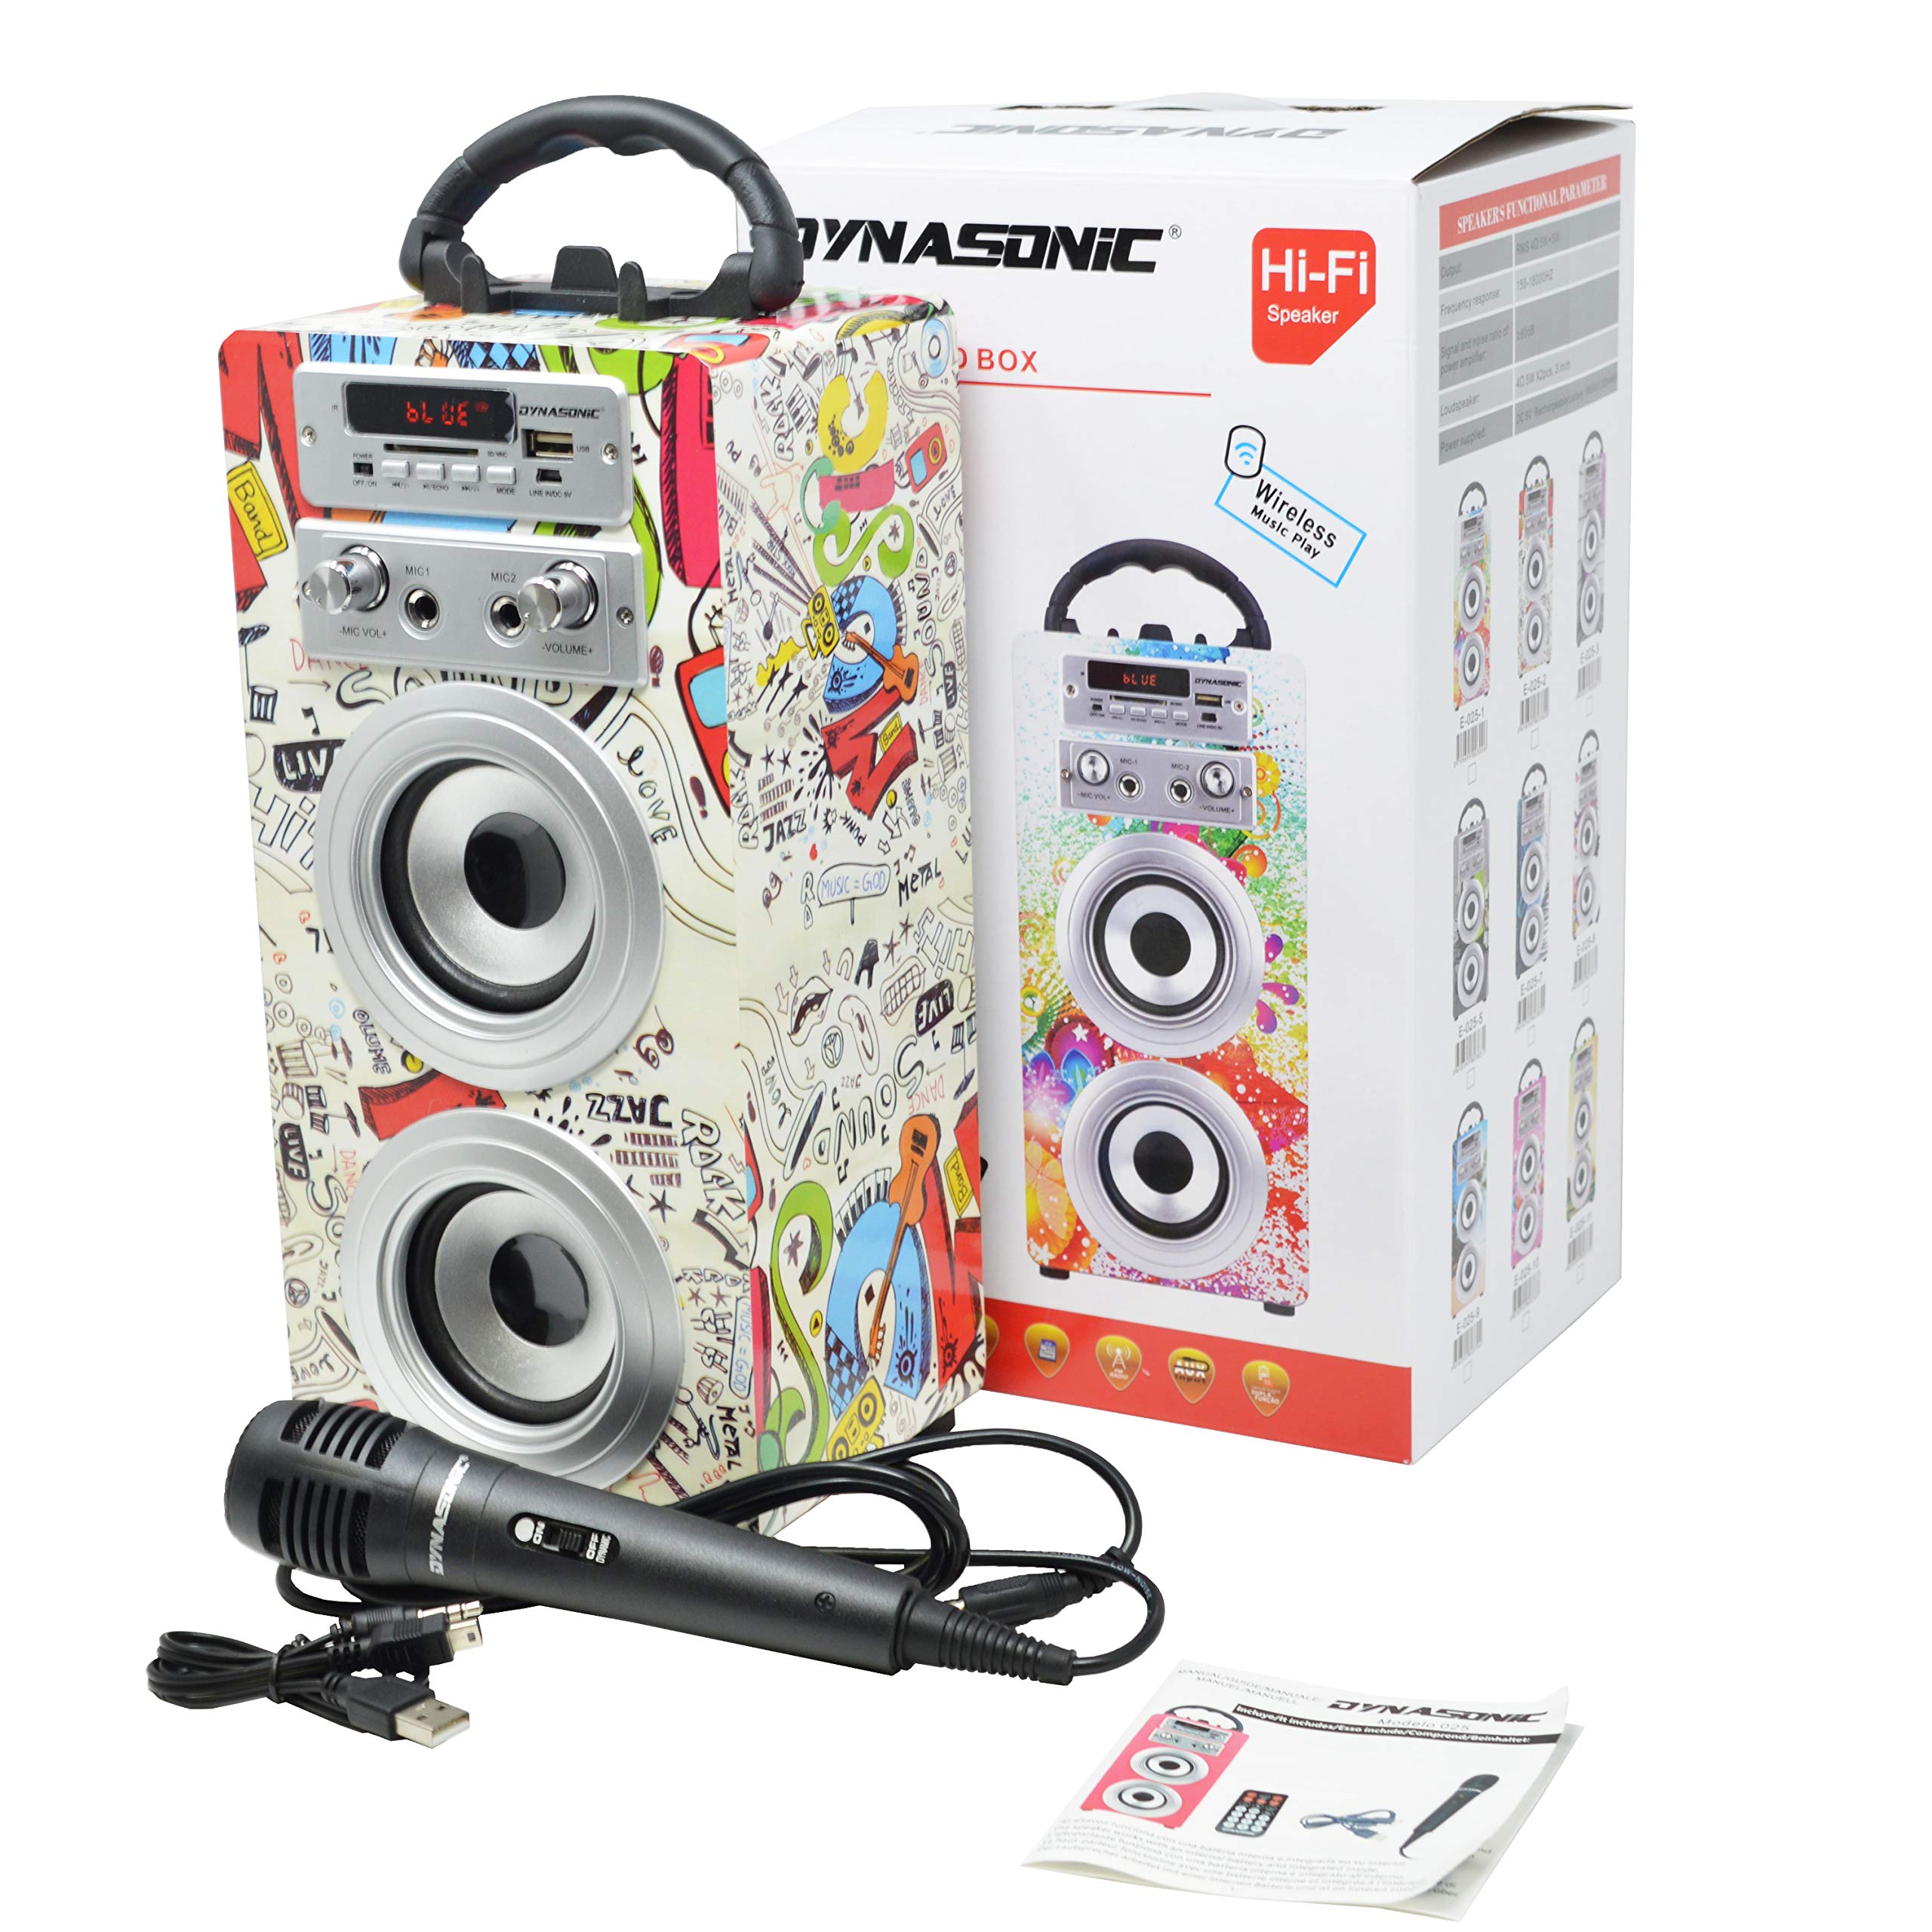 Dynasonic 025-12 Altavoz Bluetooth con Karaoke + 2 Micrófonos